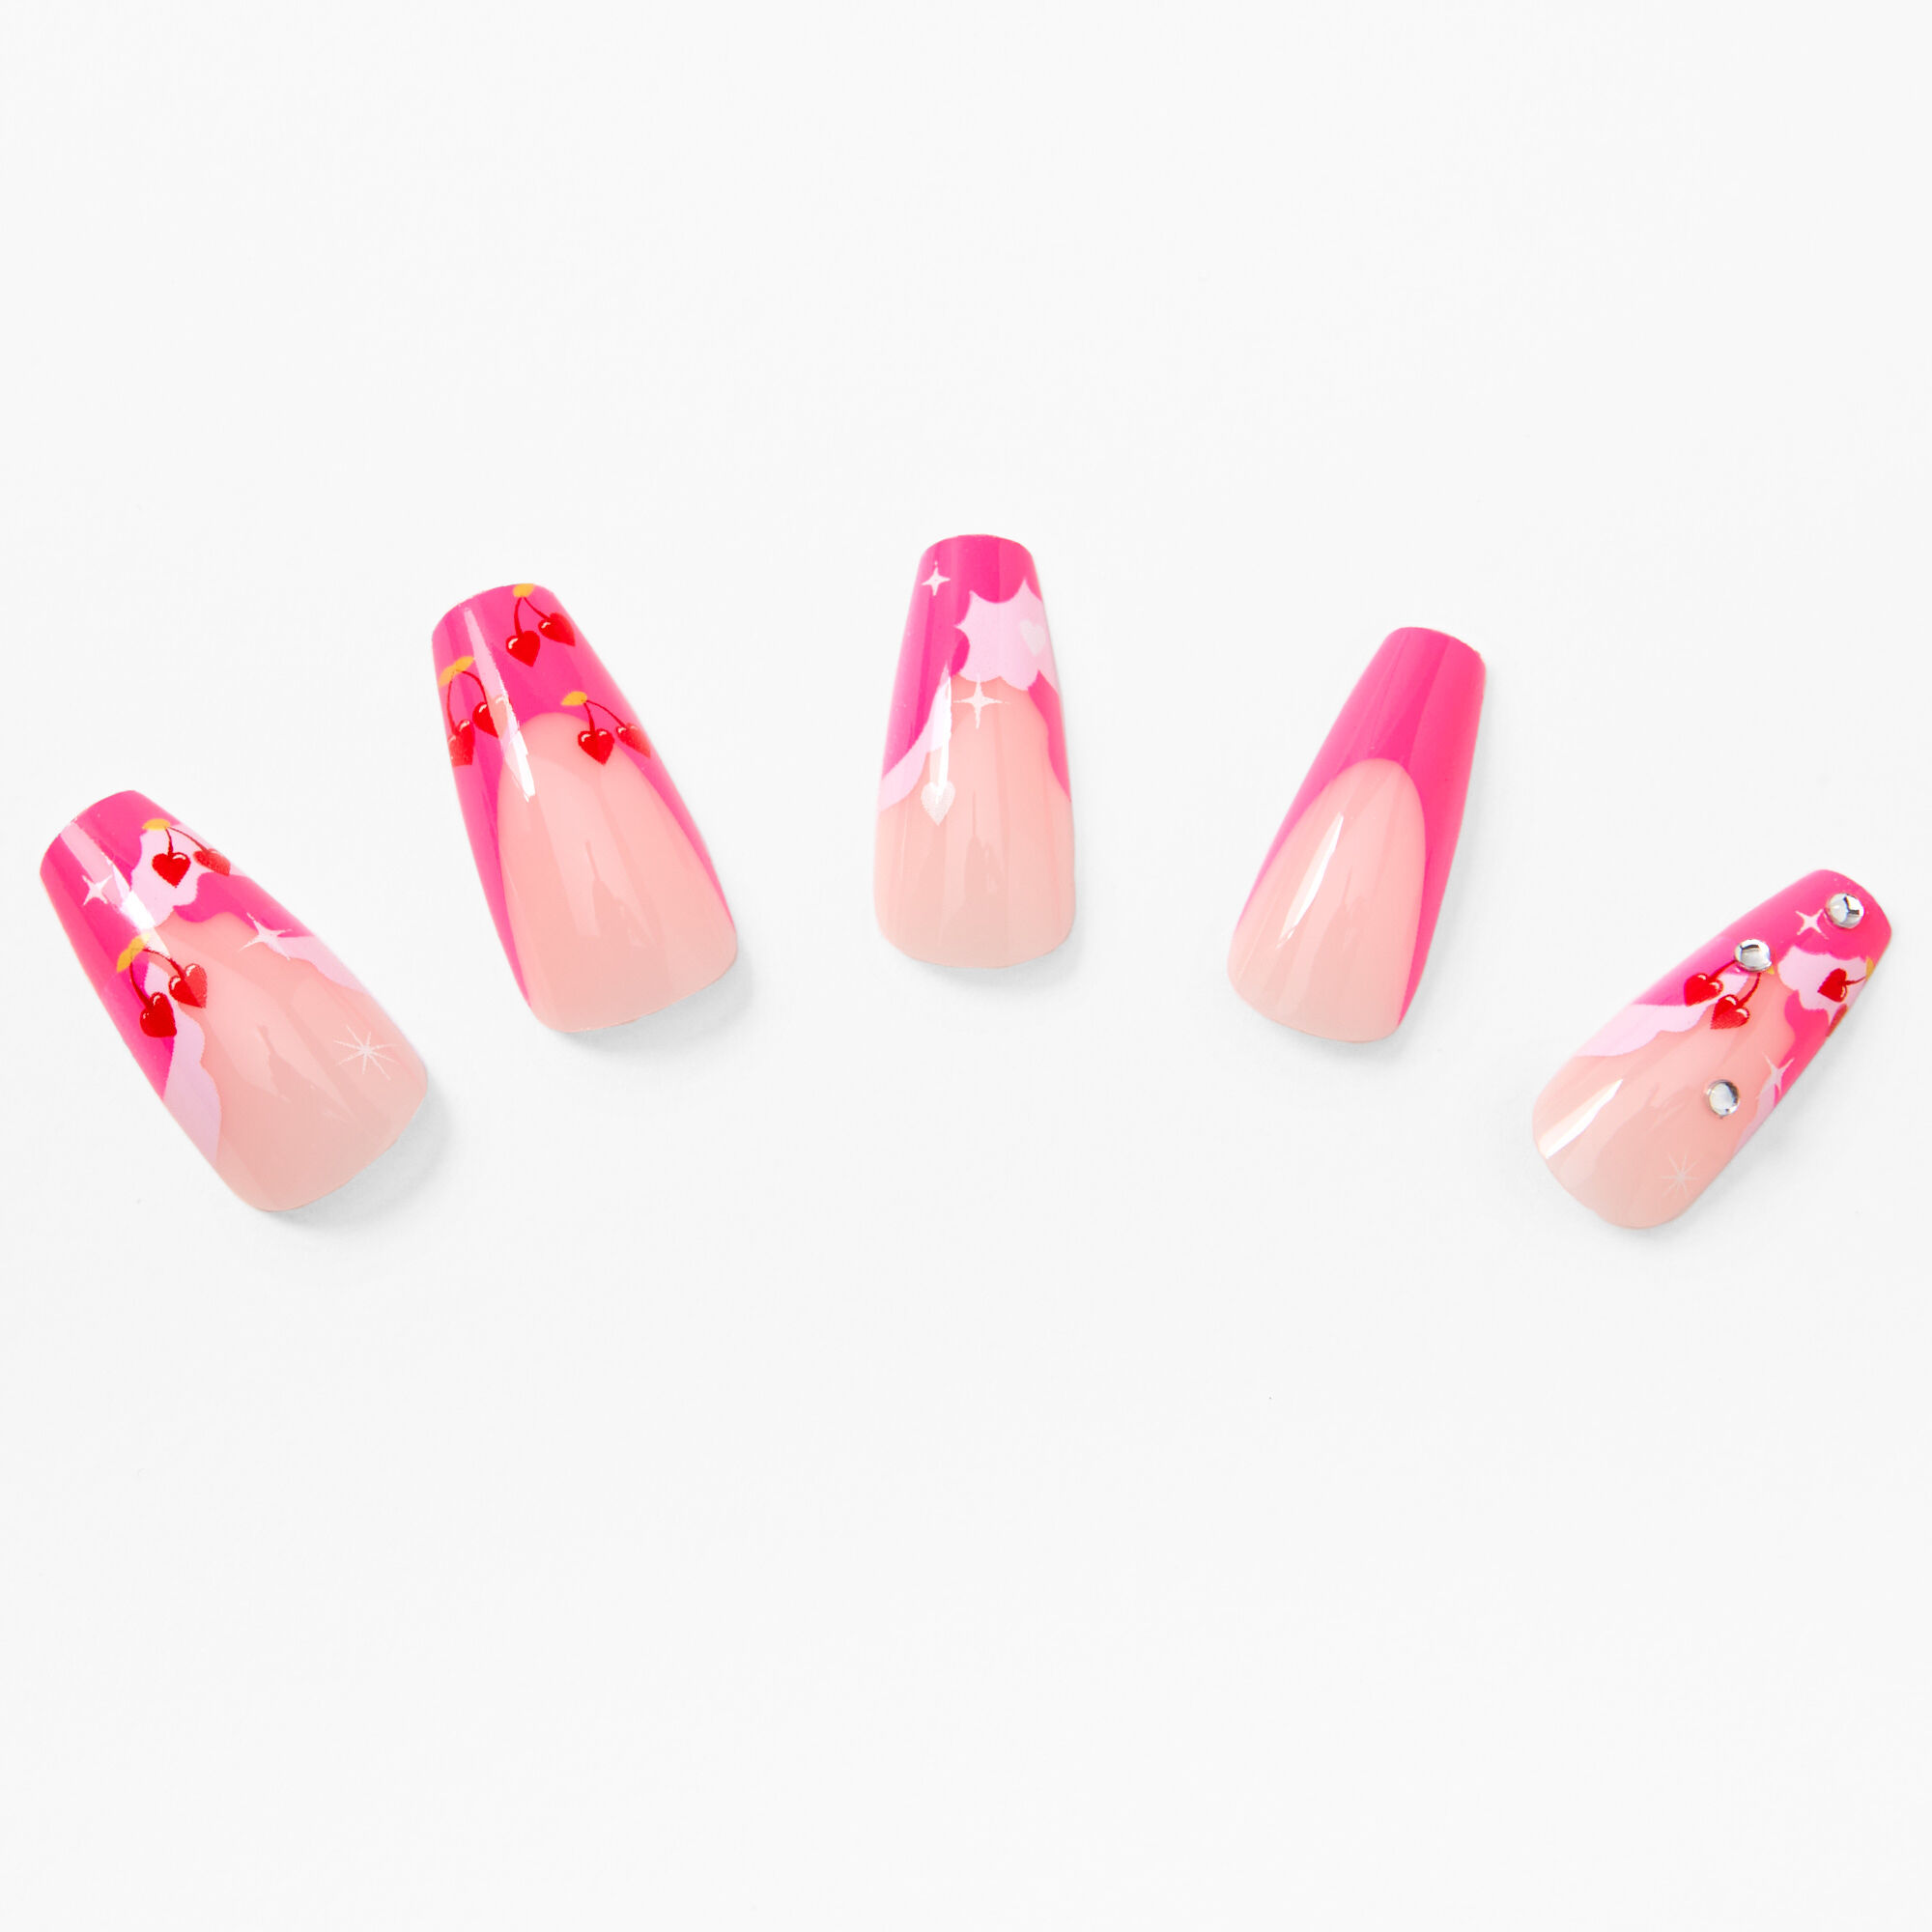 Nail Set pack of 20 Light Pink Marble nails